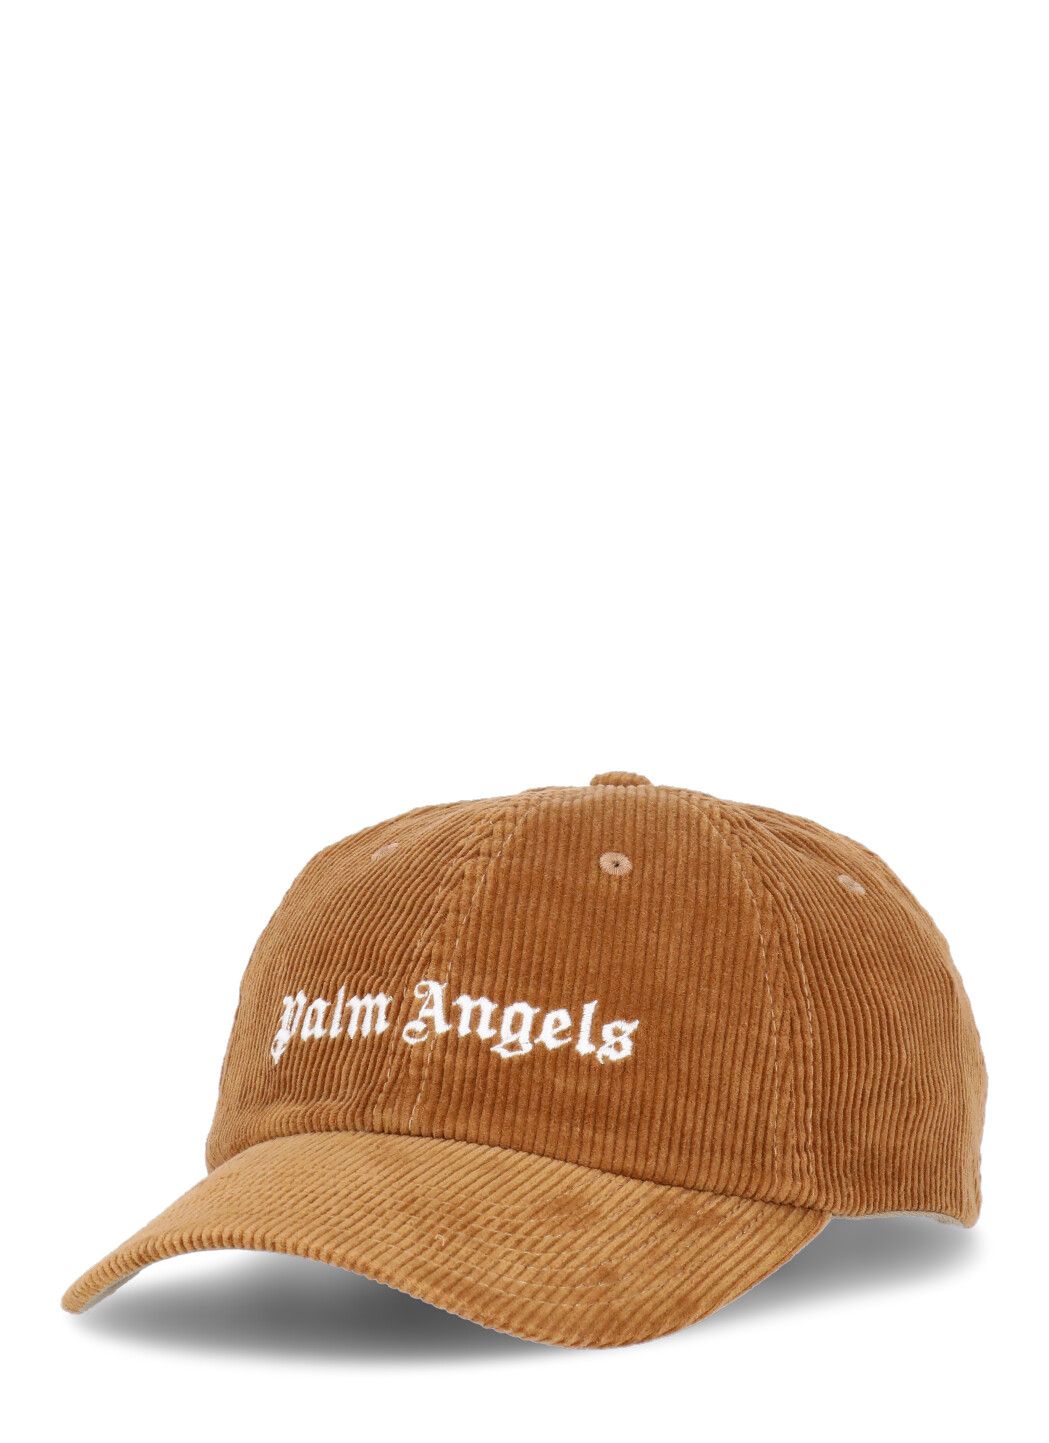 Palm Angels Monogram Trucker Baseball Cap